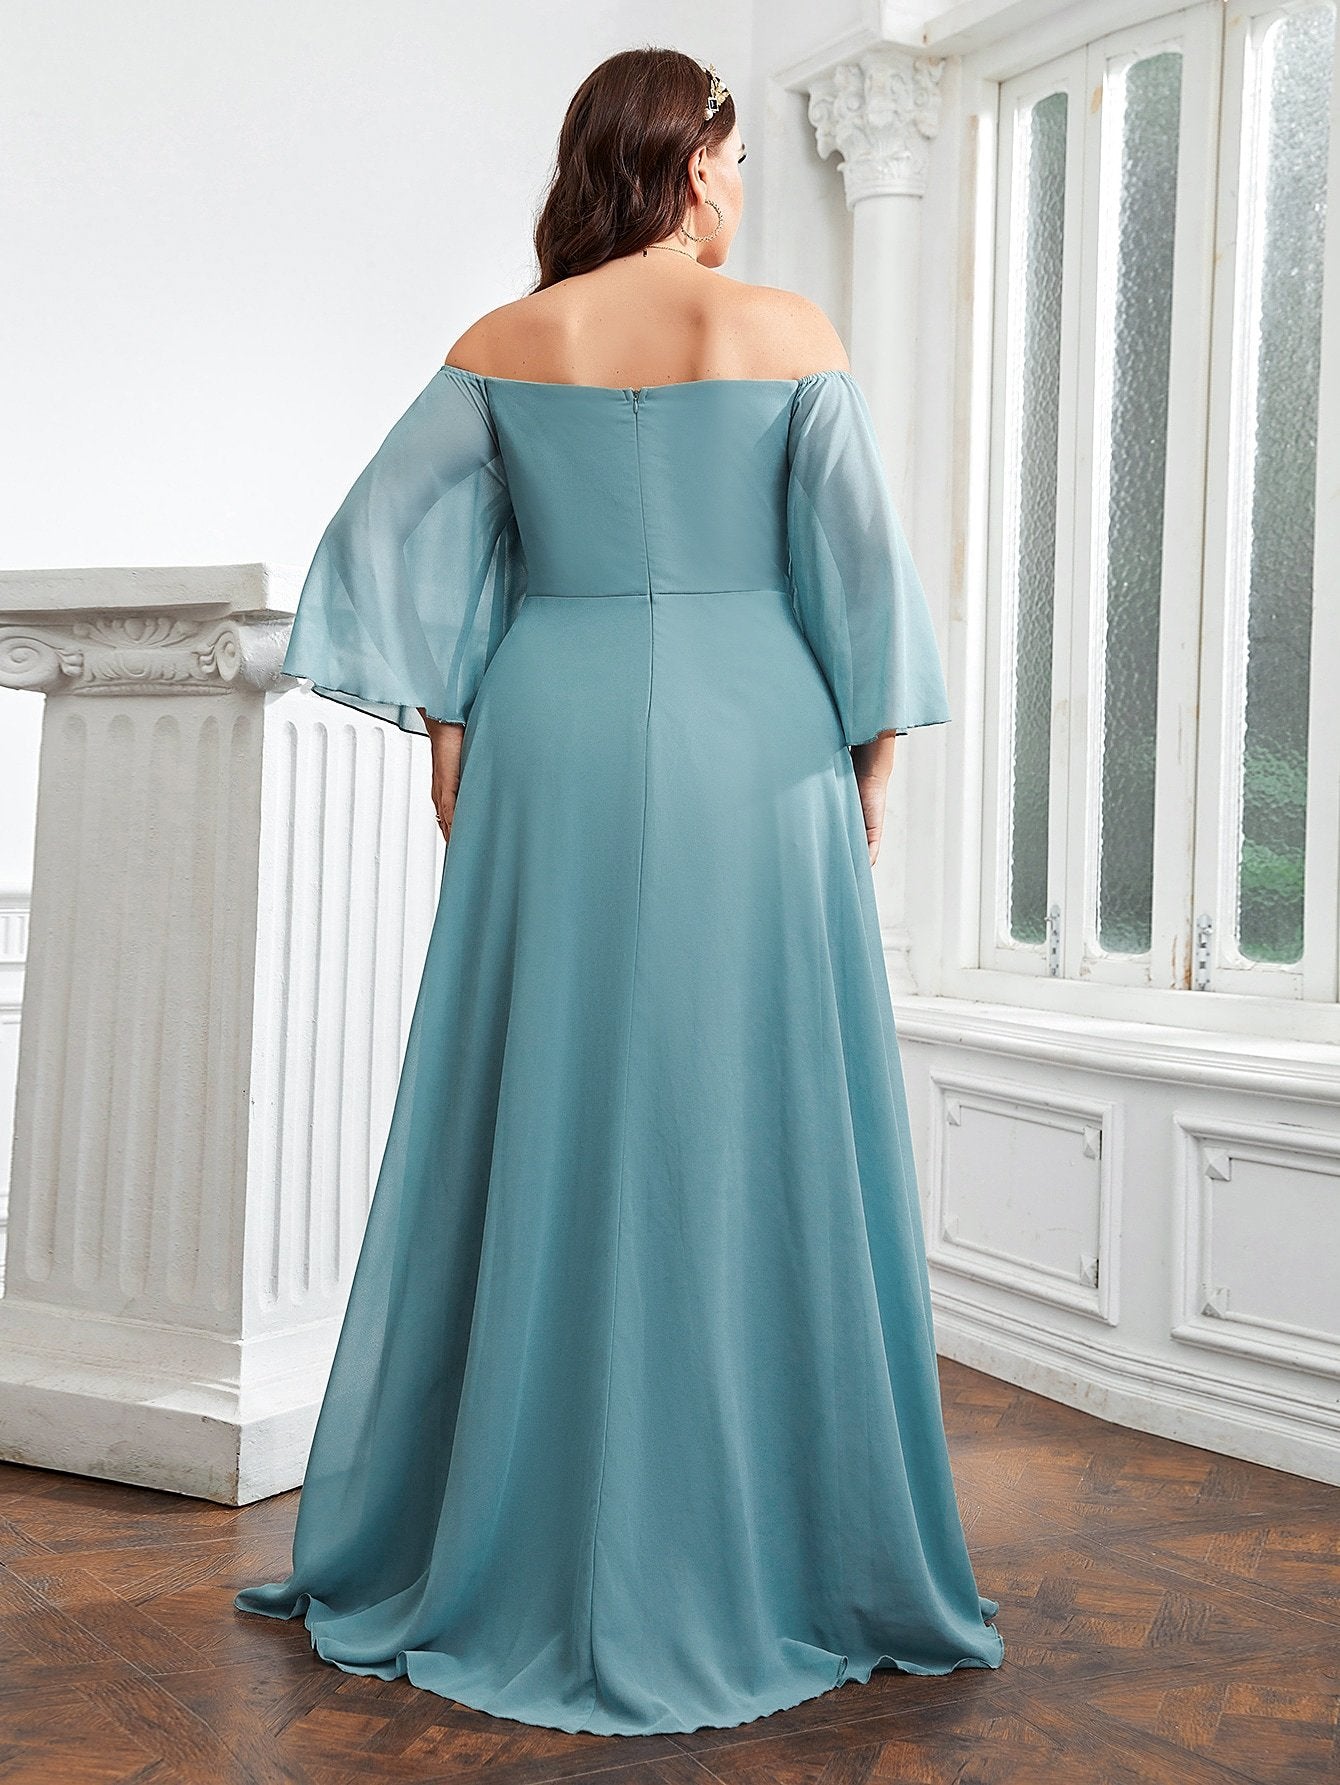 Strapless Applique Long Sleeve Elegant Evening Dress